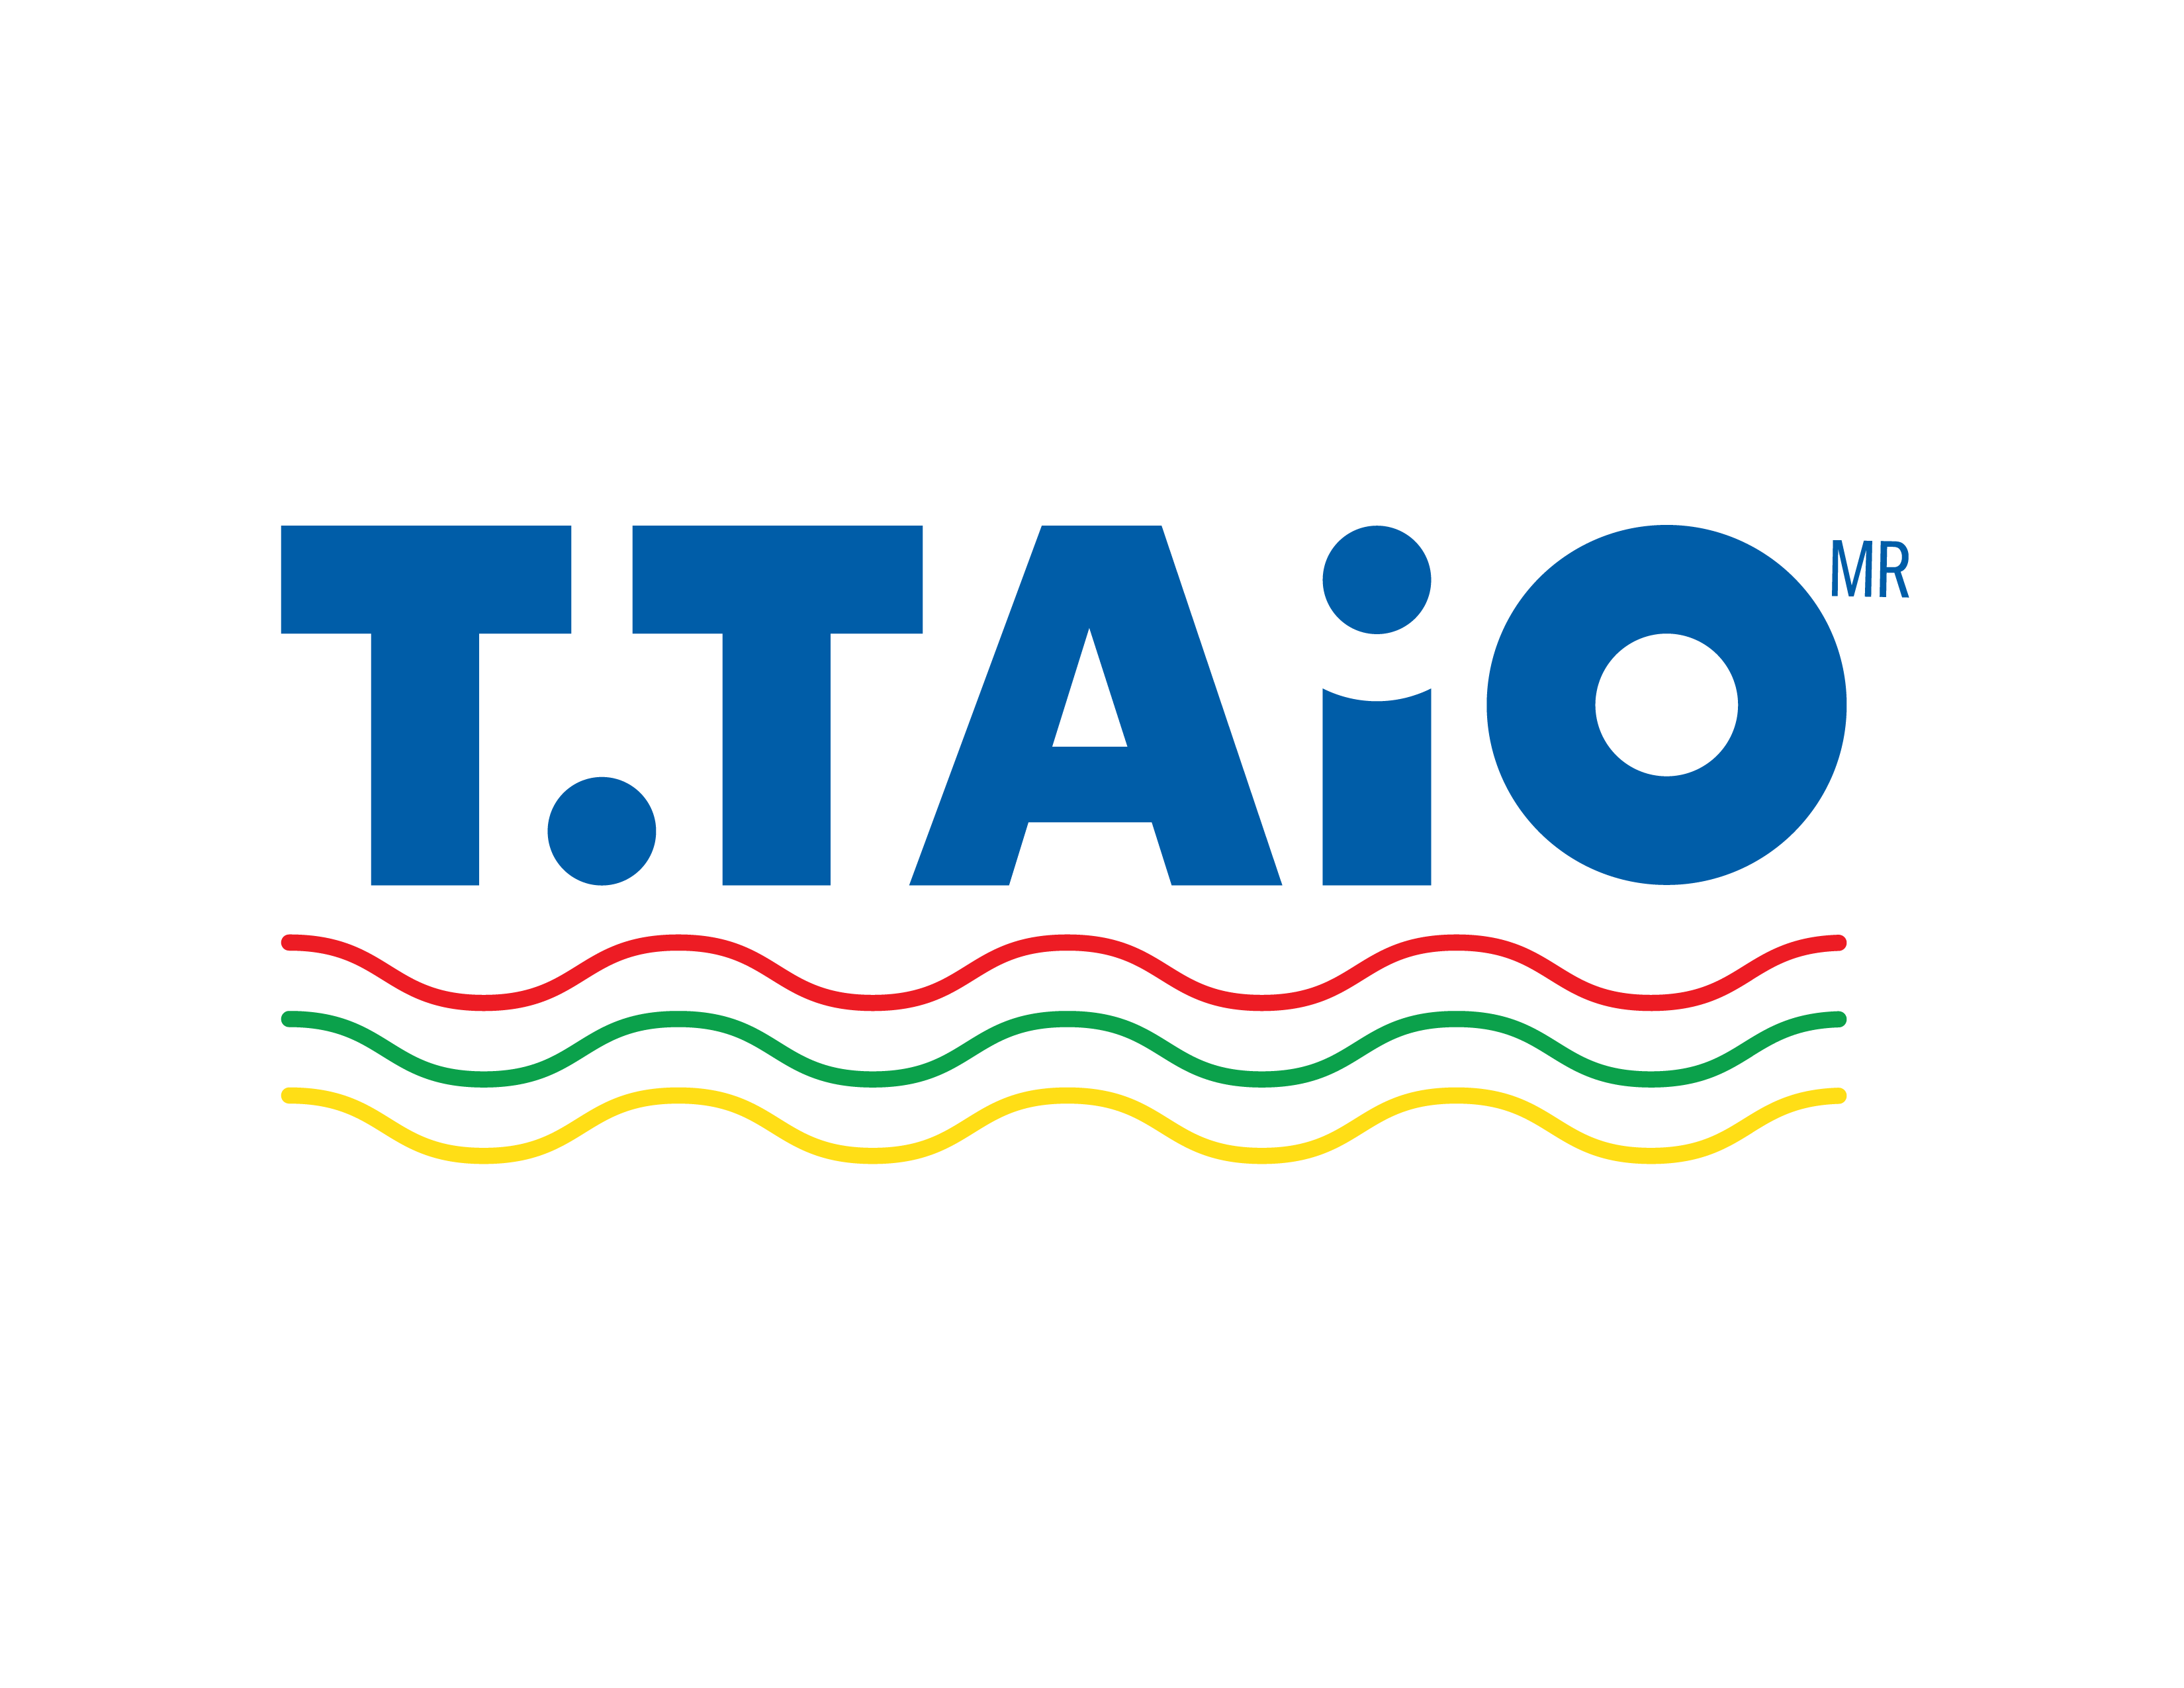 ¿Ya conoces la fascinante historia de T.Taio?